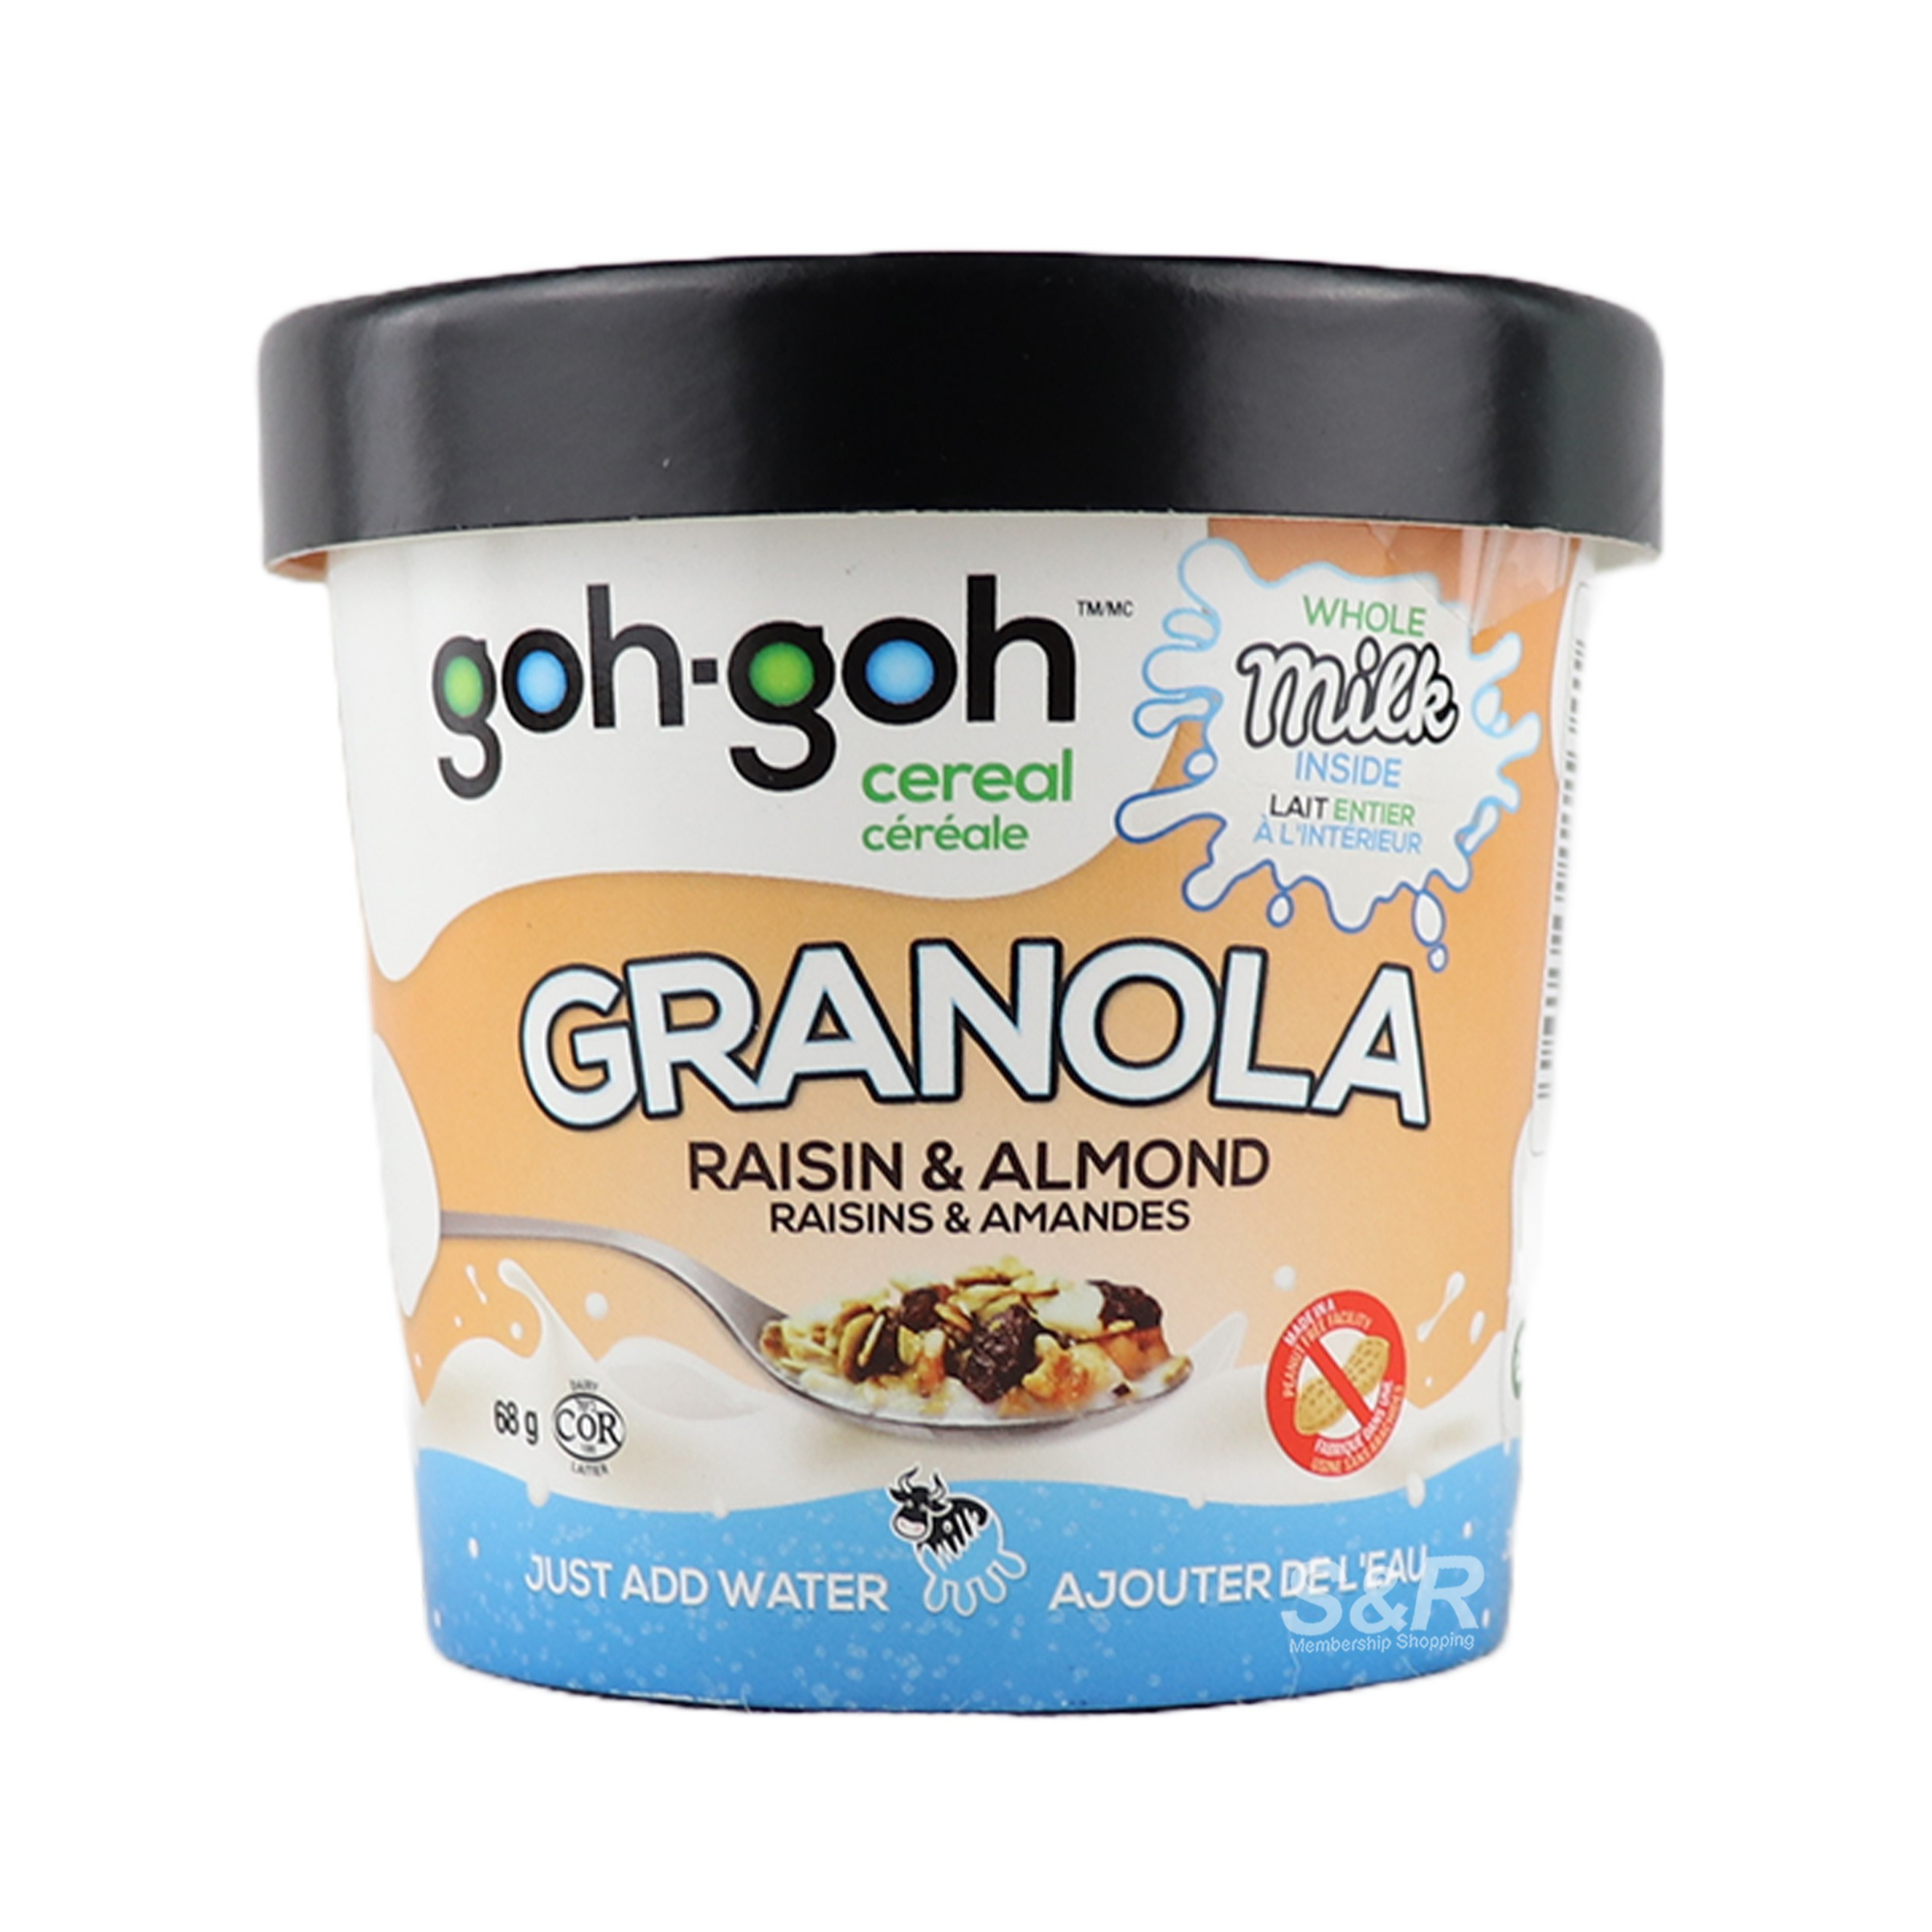 Goh-goh Raisin & Almond Granola Greek Yogurt Cereal 68g